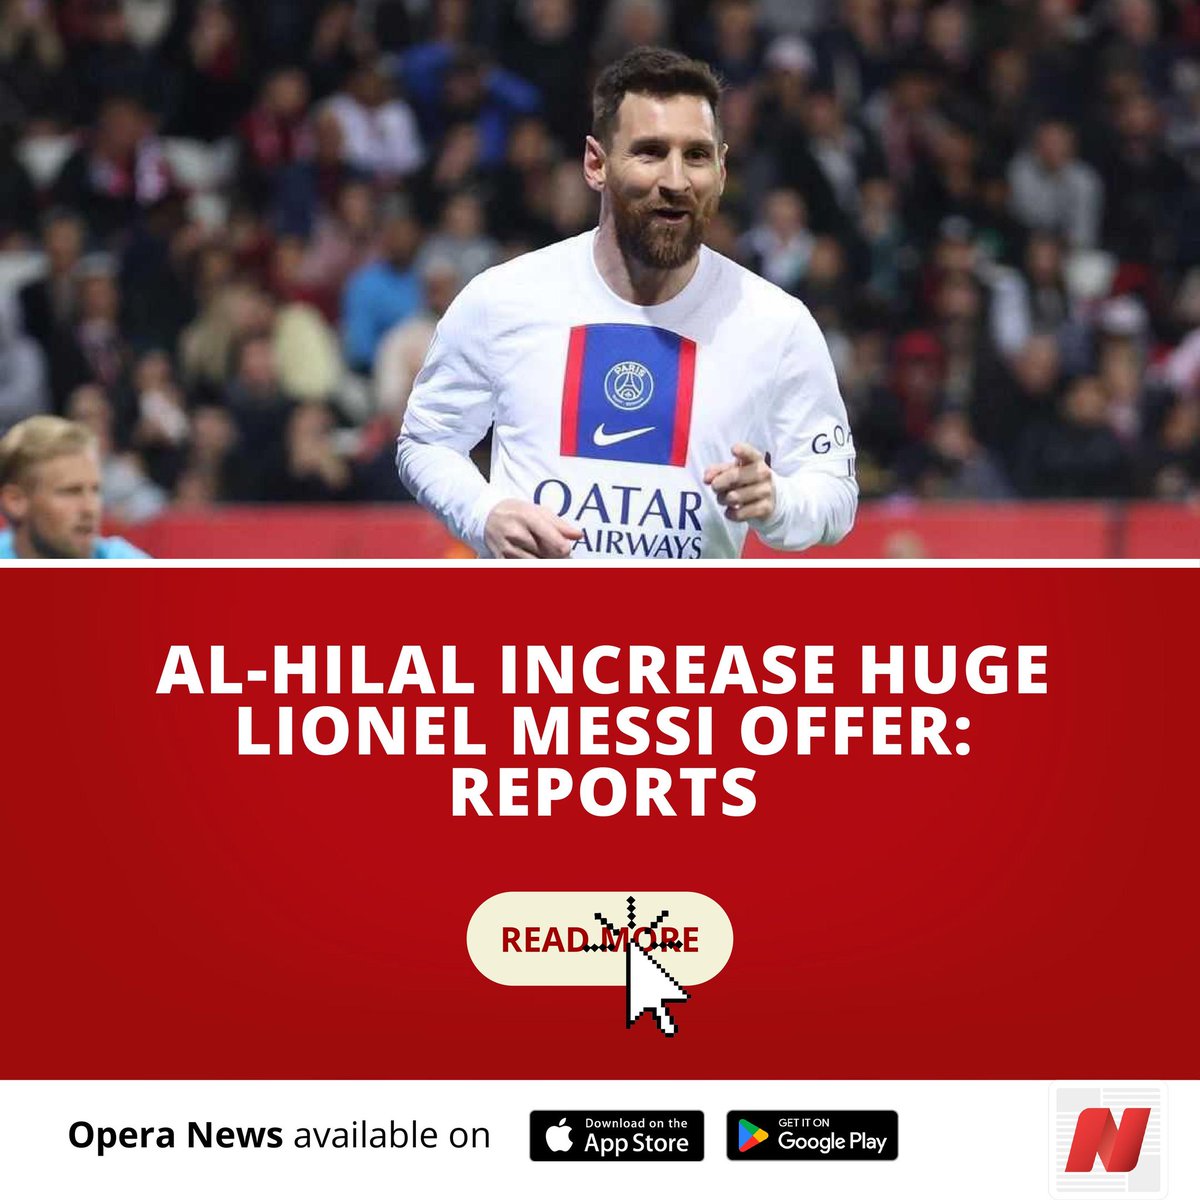 Al-Hilal Increase Huge Lionel Messi Offer: Reports
Read more:opr.news/6aefb5e230606e…
#OperaNews #messi #transfernews #AlHilal #sports #football #footballfans #newsport #transfer #football